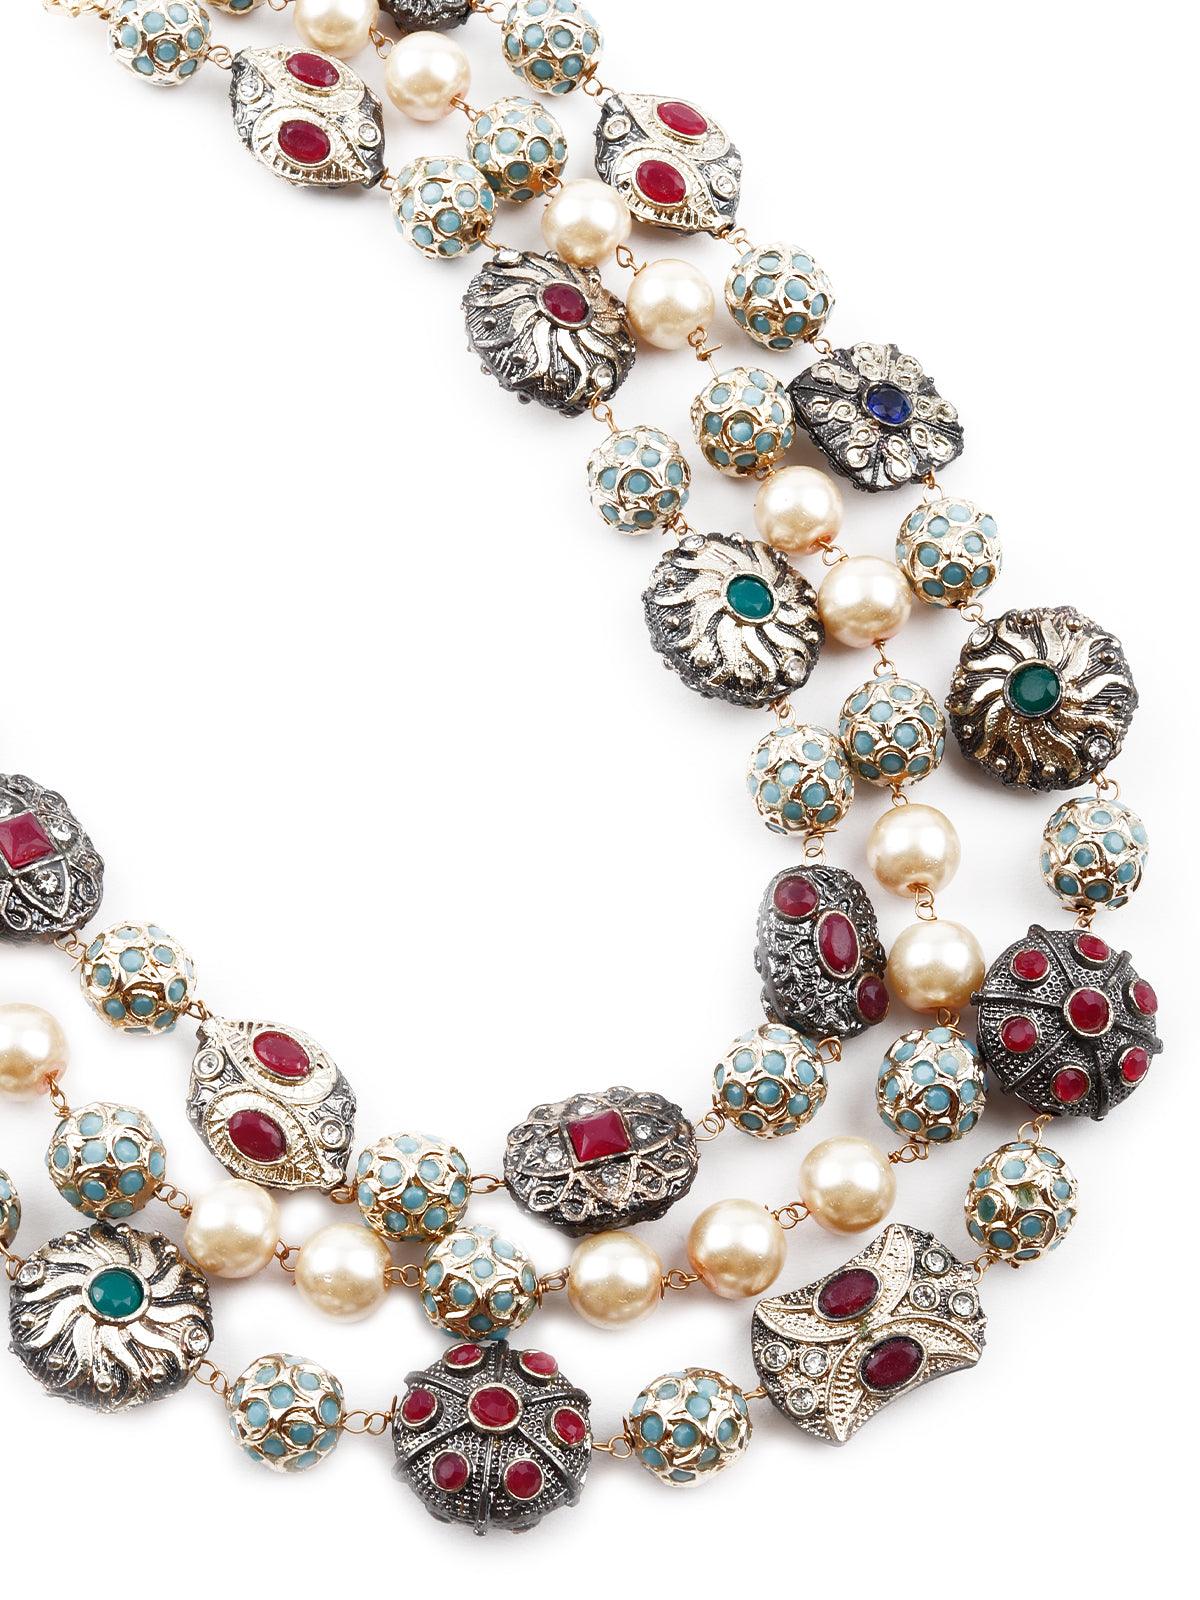 Women's Three-Layered Stunning Embellished Oxidized Necklace Set - Odette